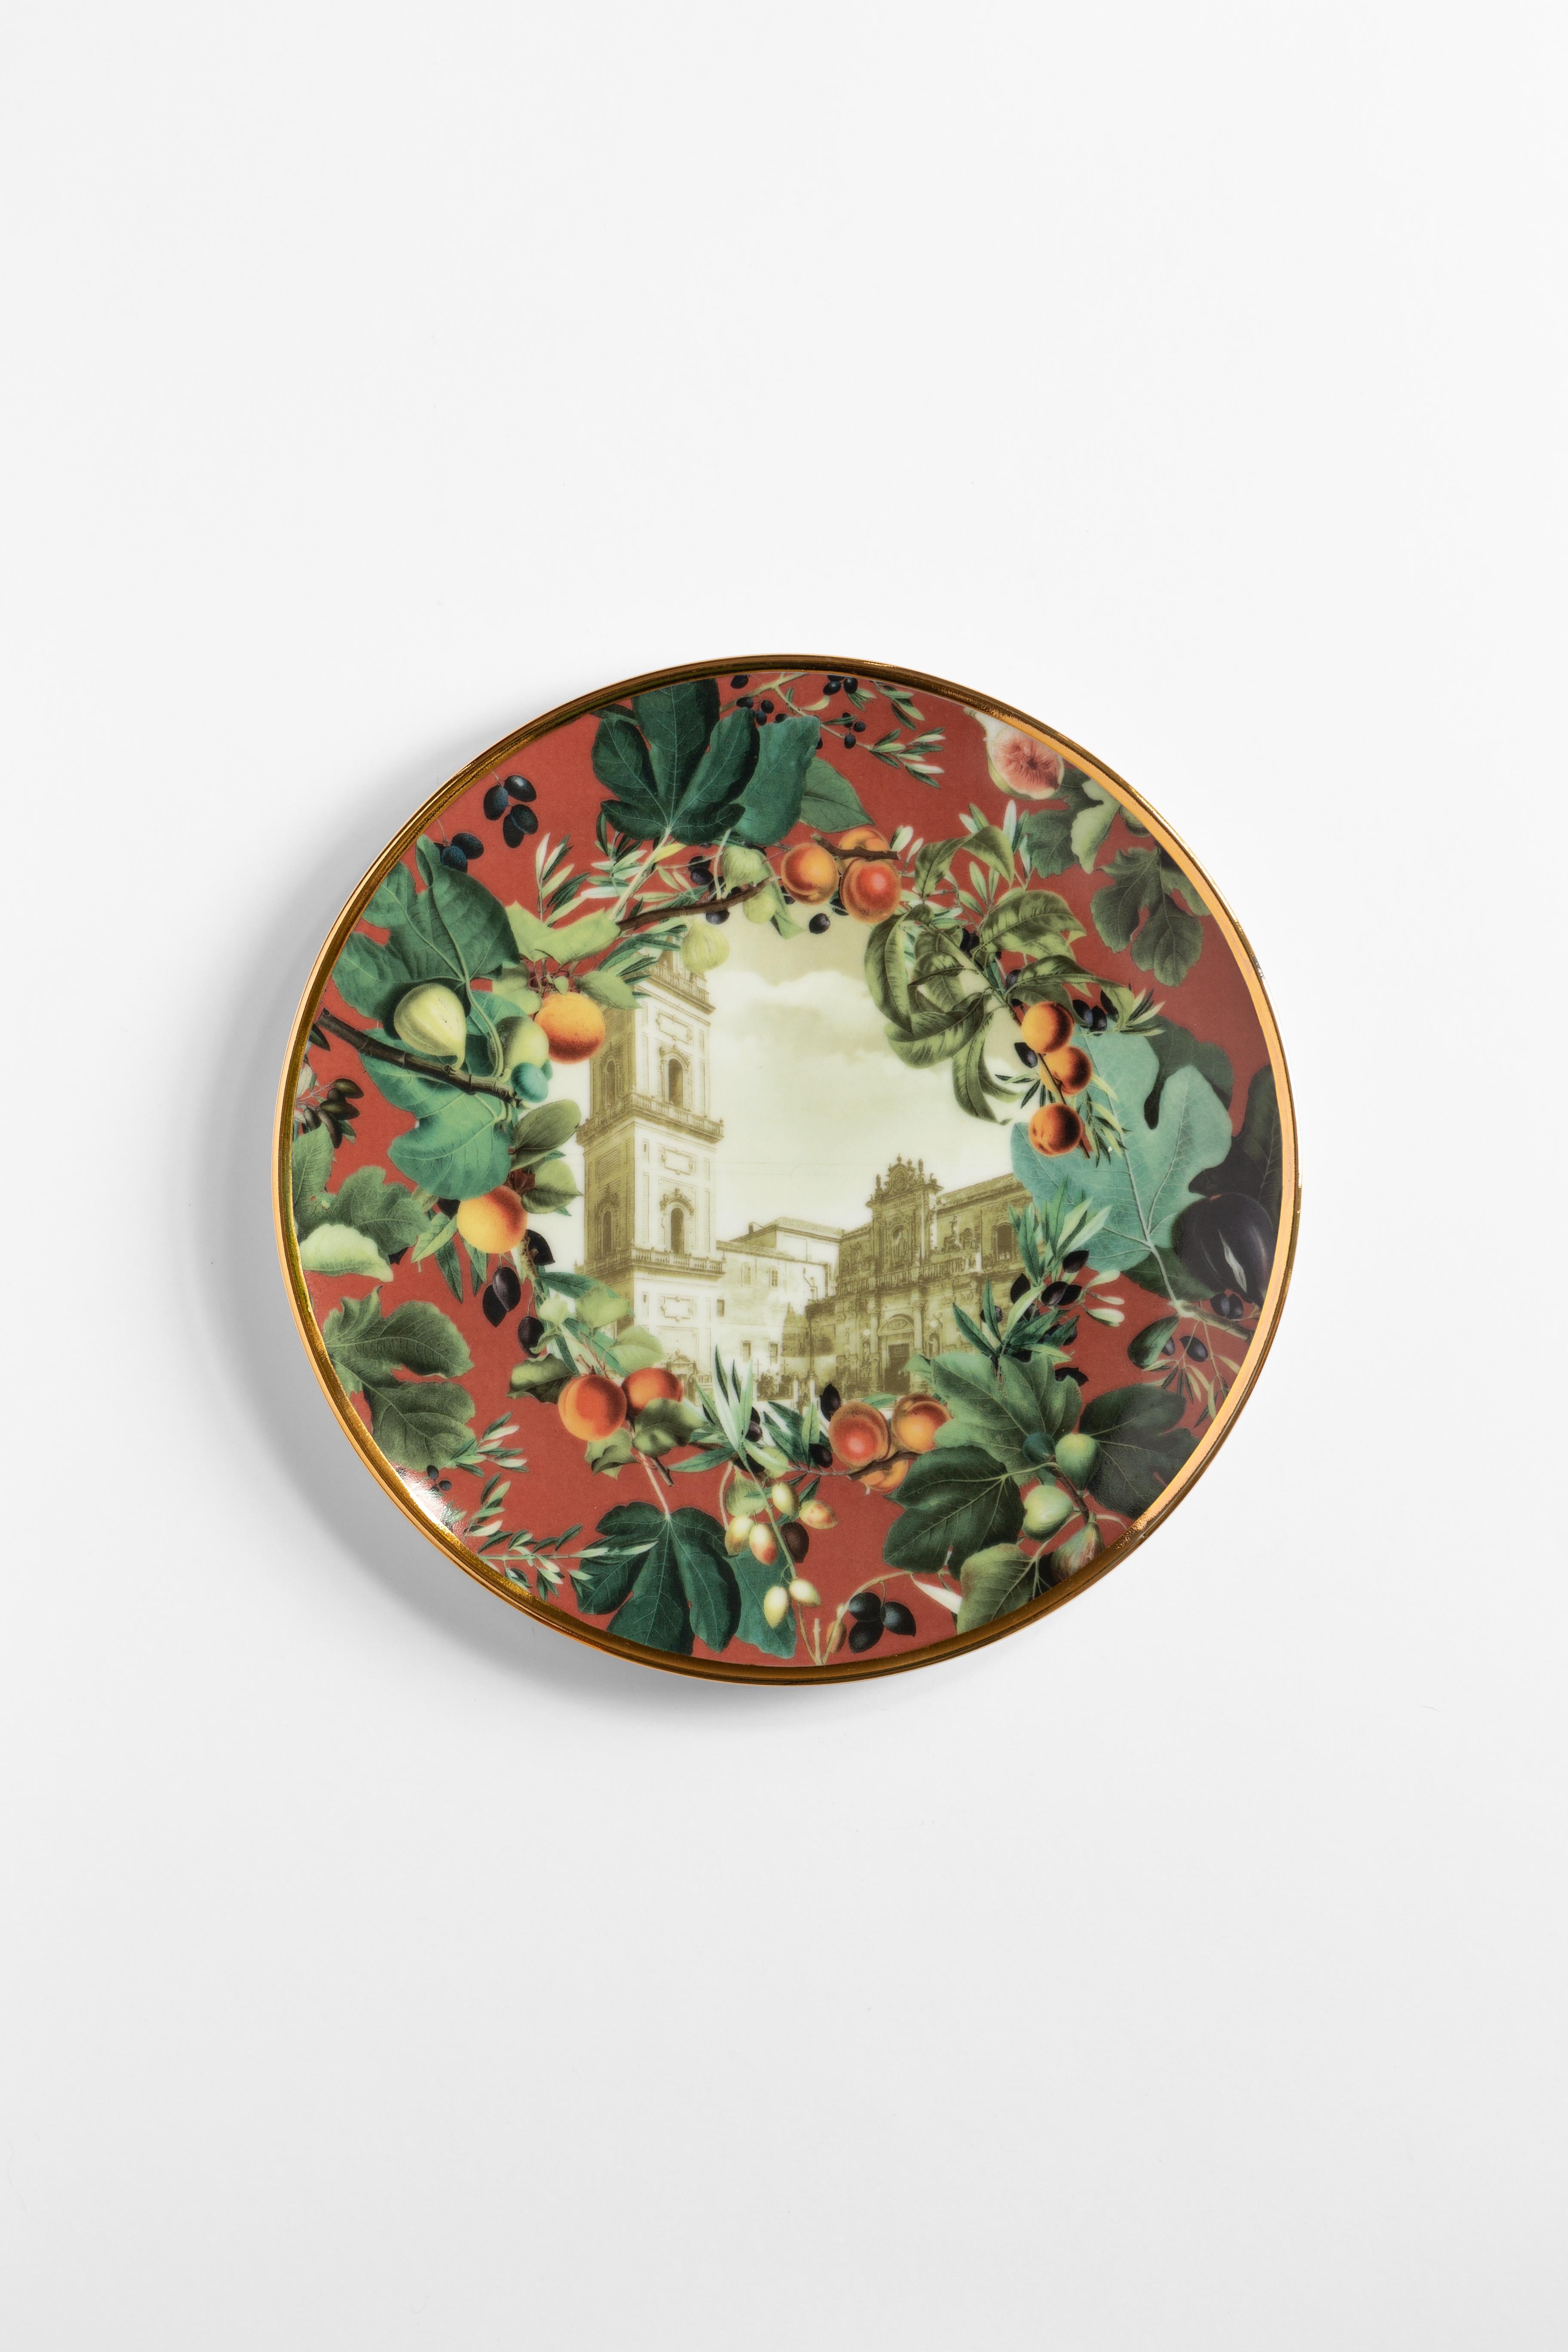 Apulia, Seven Contemporary Porcelain Dessert Plates with Decorative Design For Sale 2